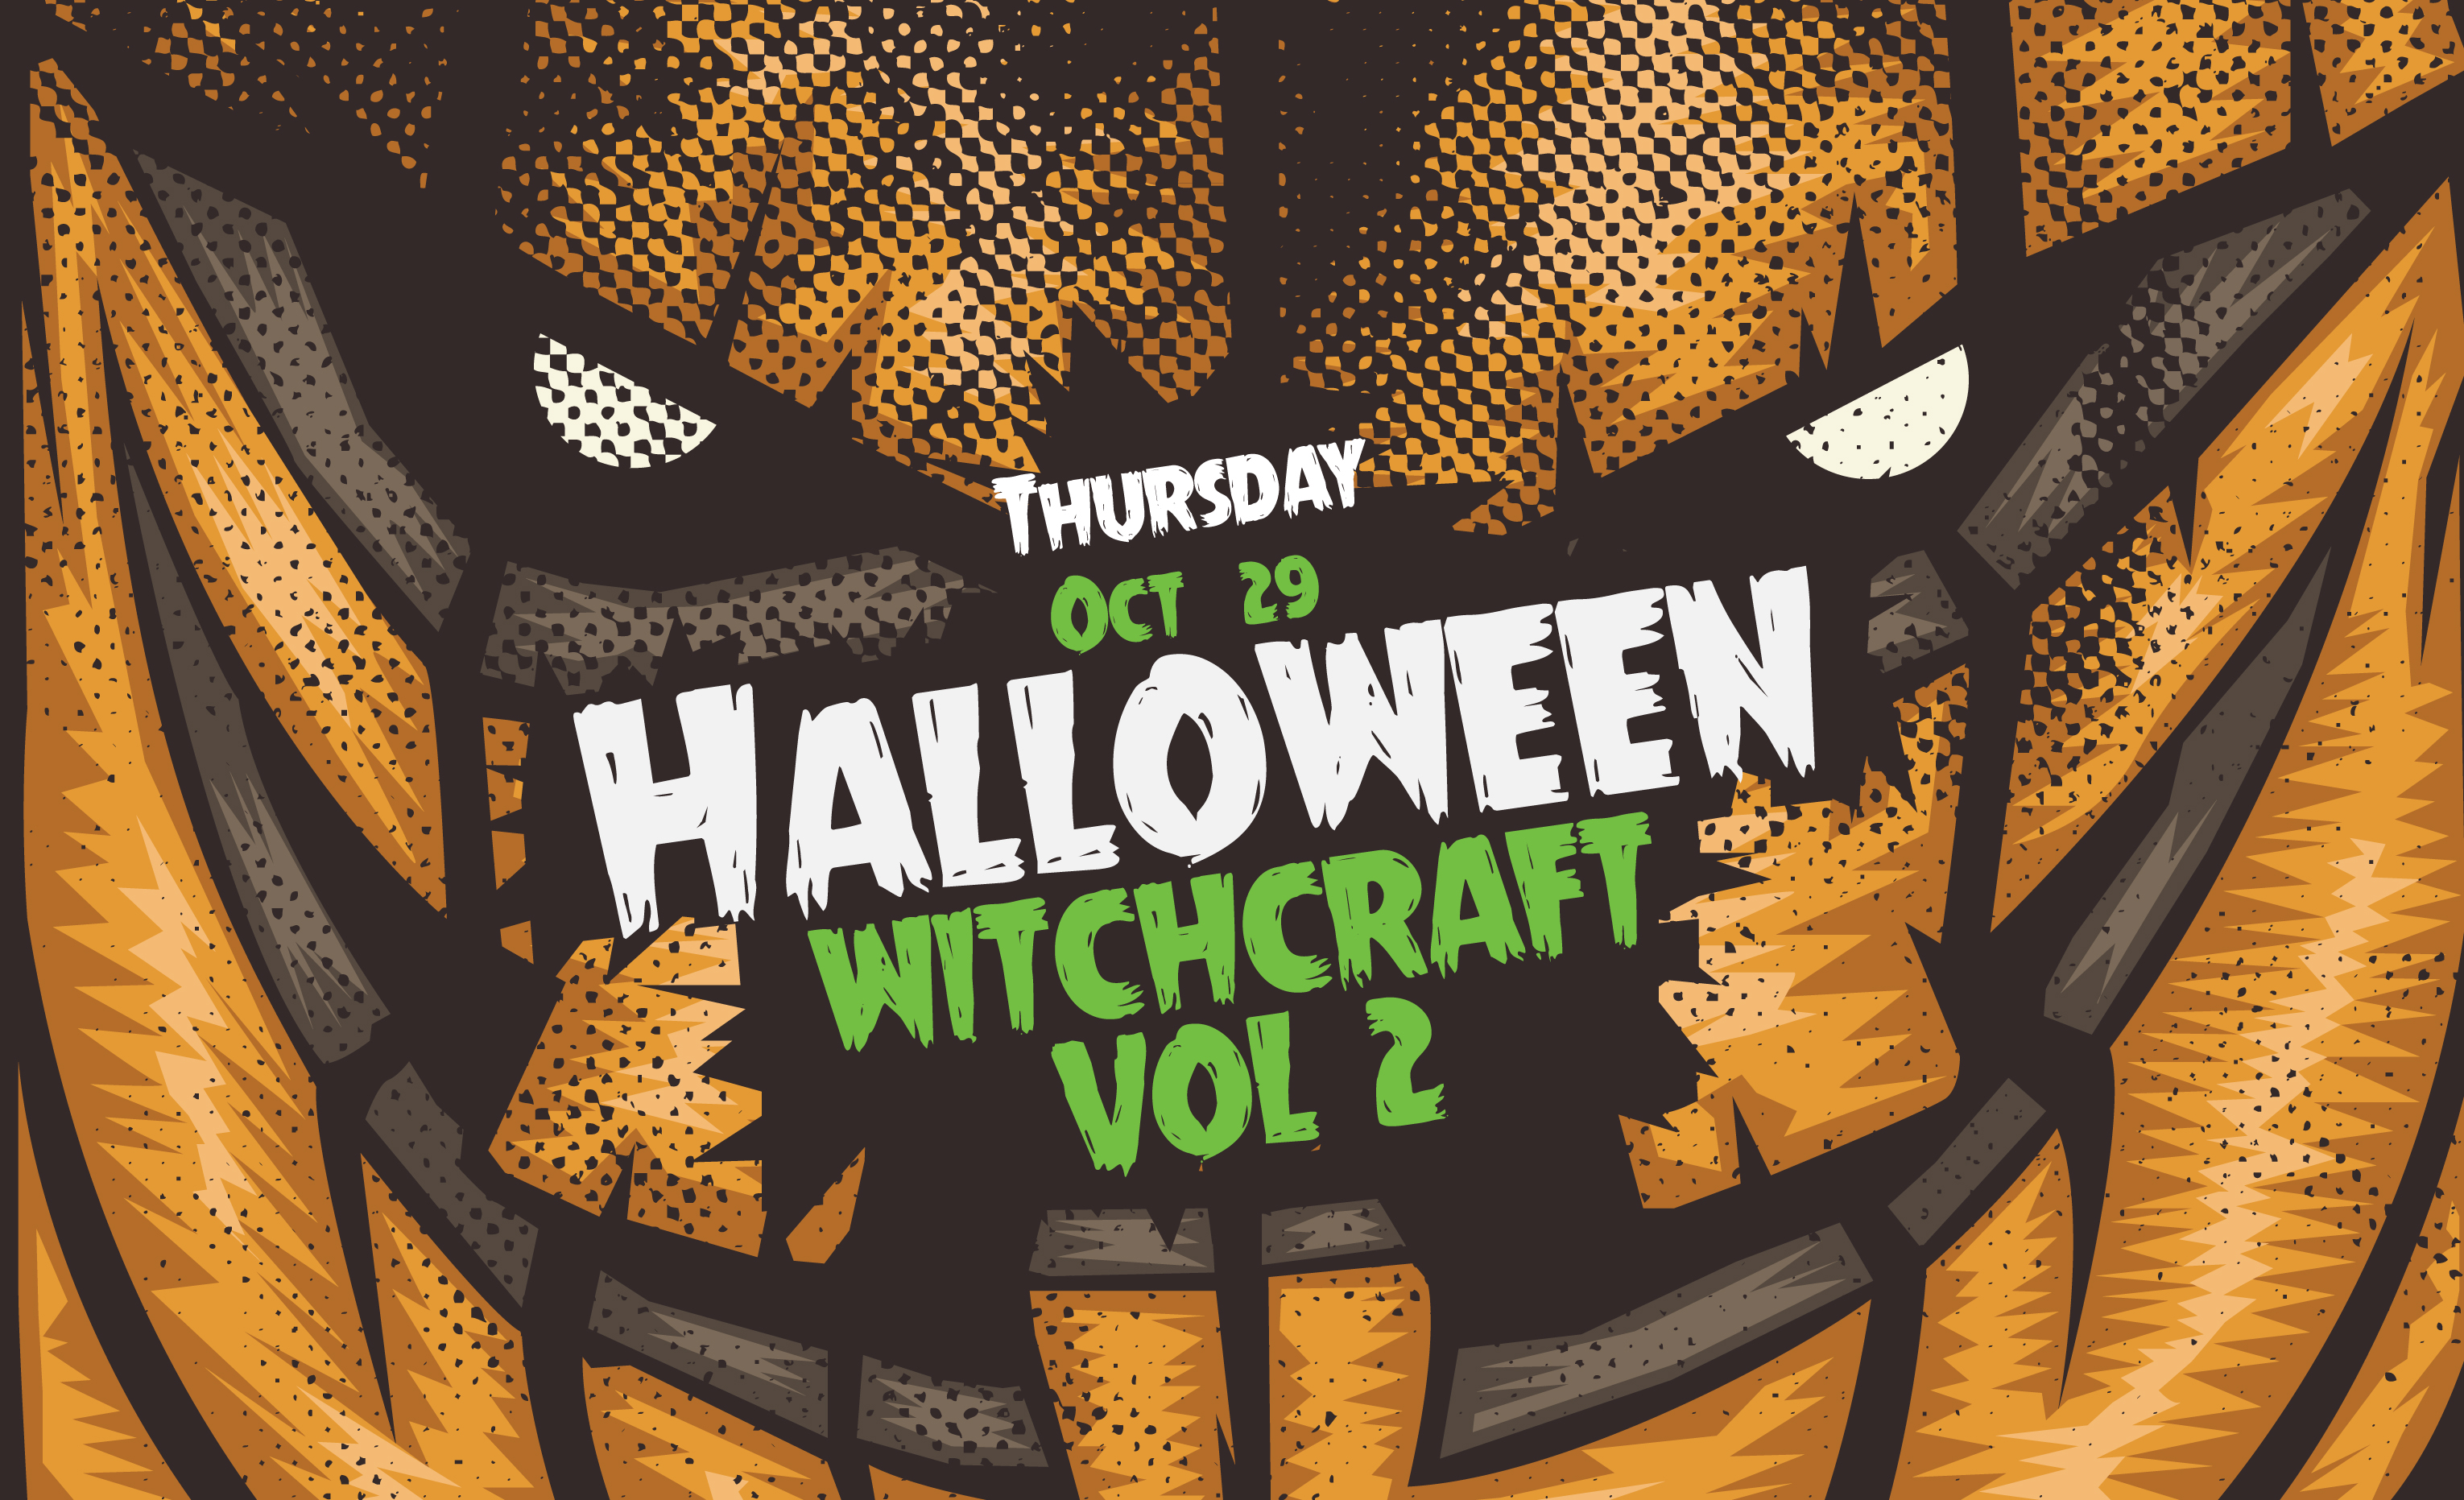 Exclusive: Witchcraft Volume 2 Halloween Party 